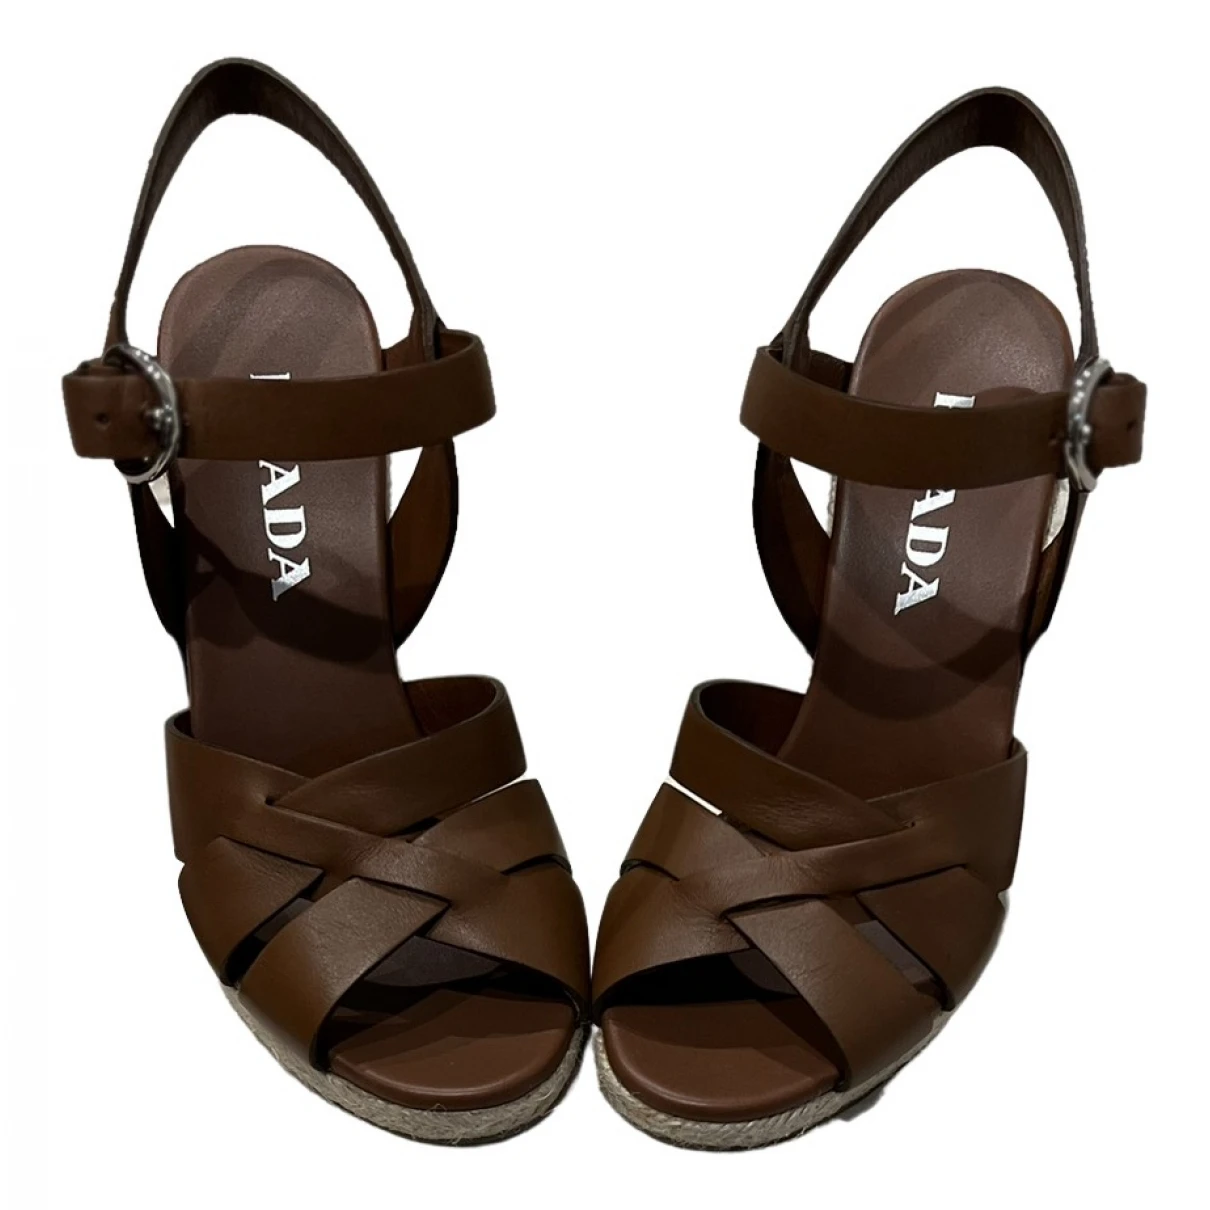 shoes Prada espadrilles for Female Leather 35 EU. Used condition